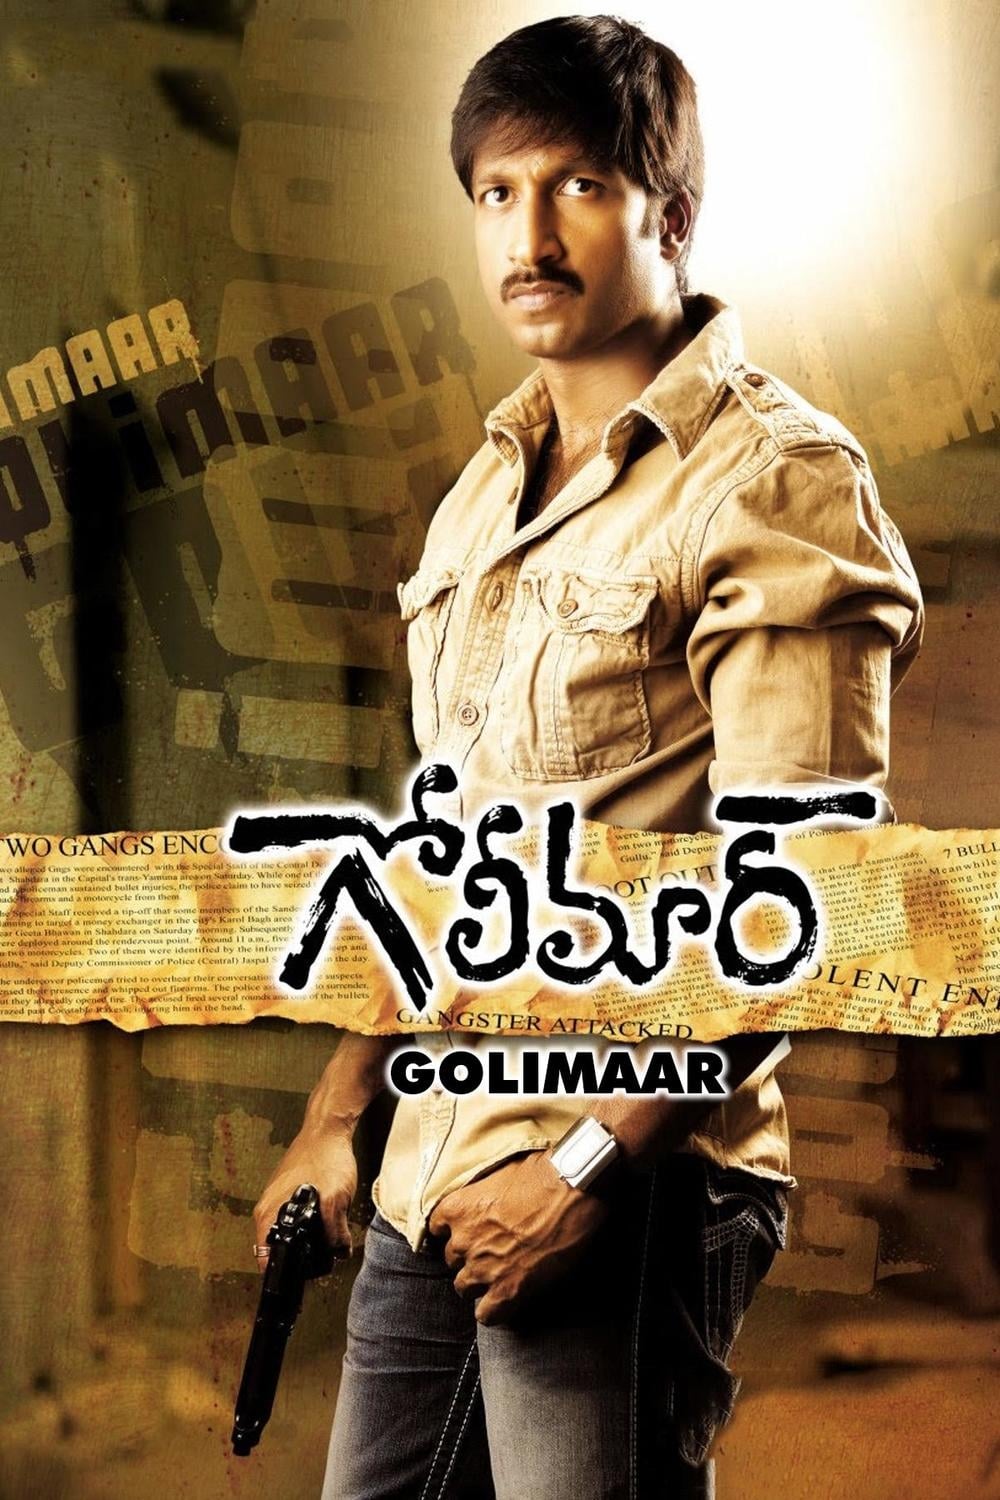 Golimaar (2010)